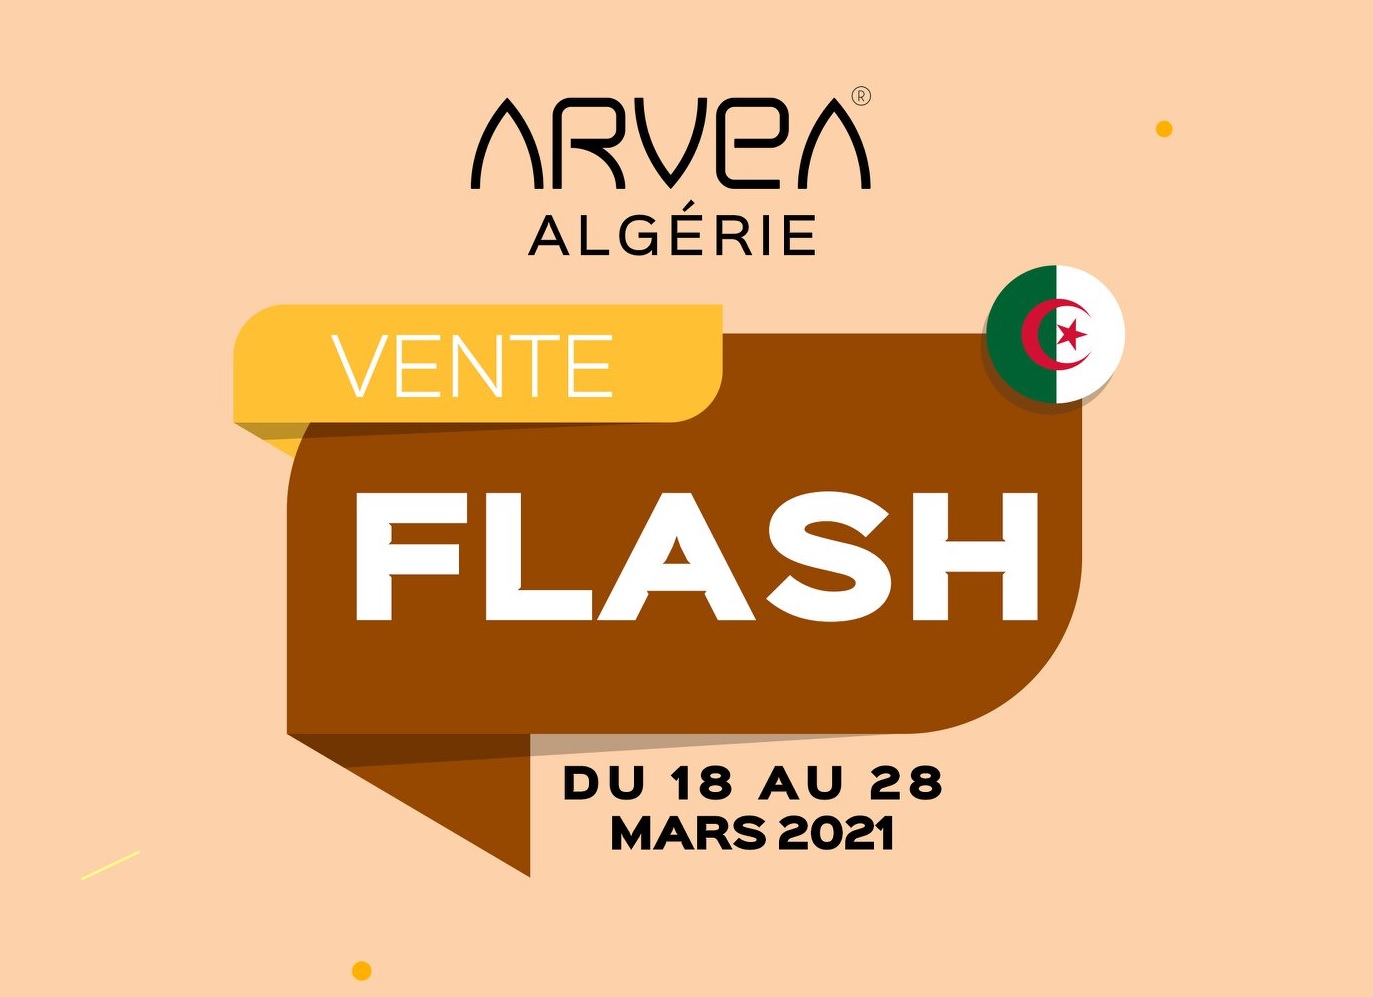 Vente Flash Mars Arvea algérie !!